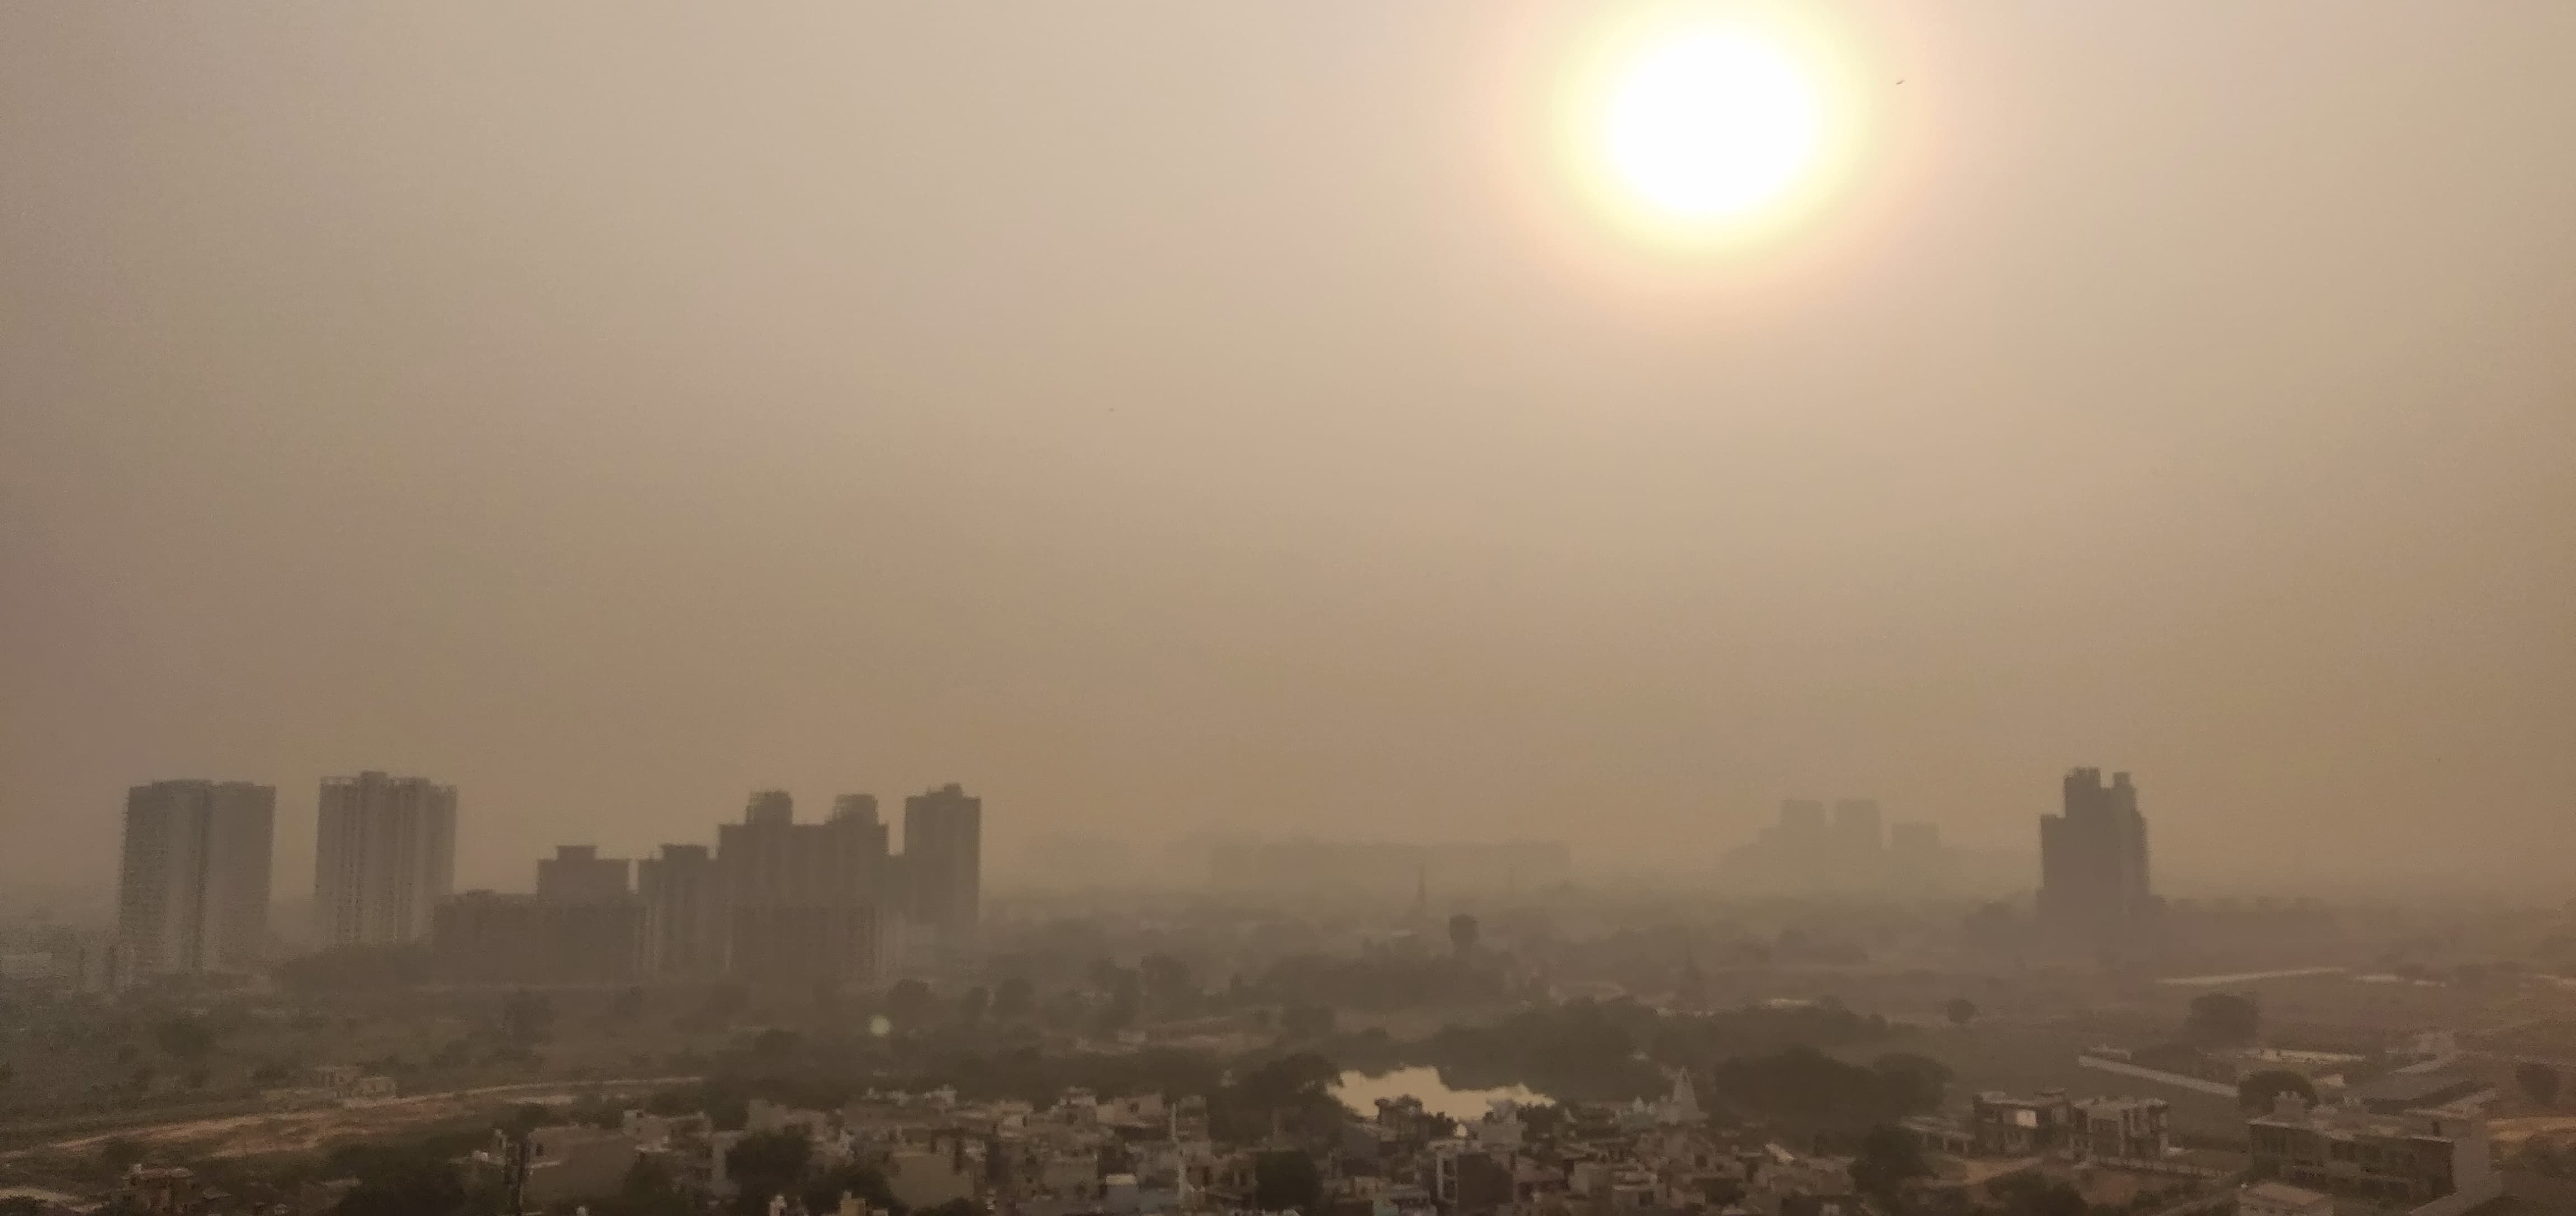 Smog over New Delhi - Construction on Hold